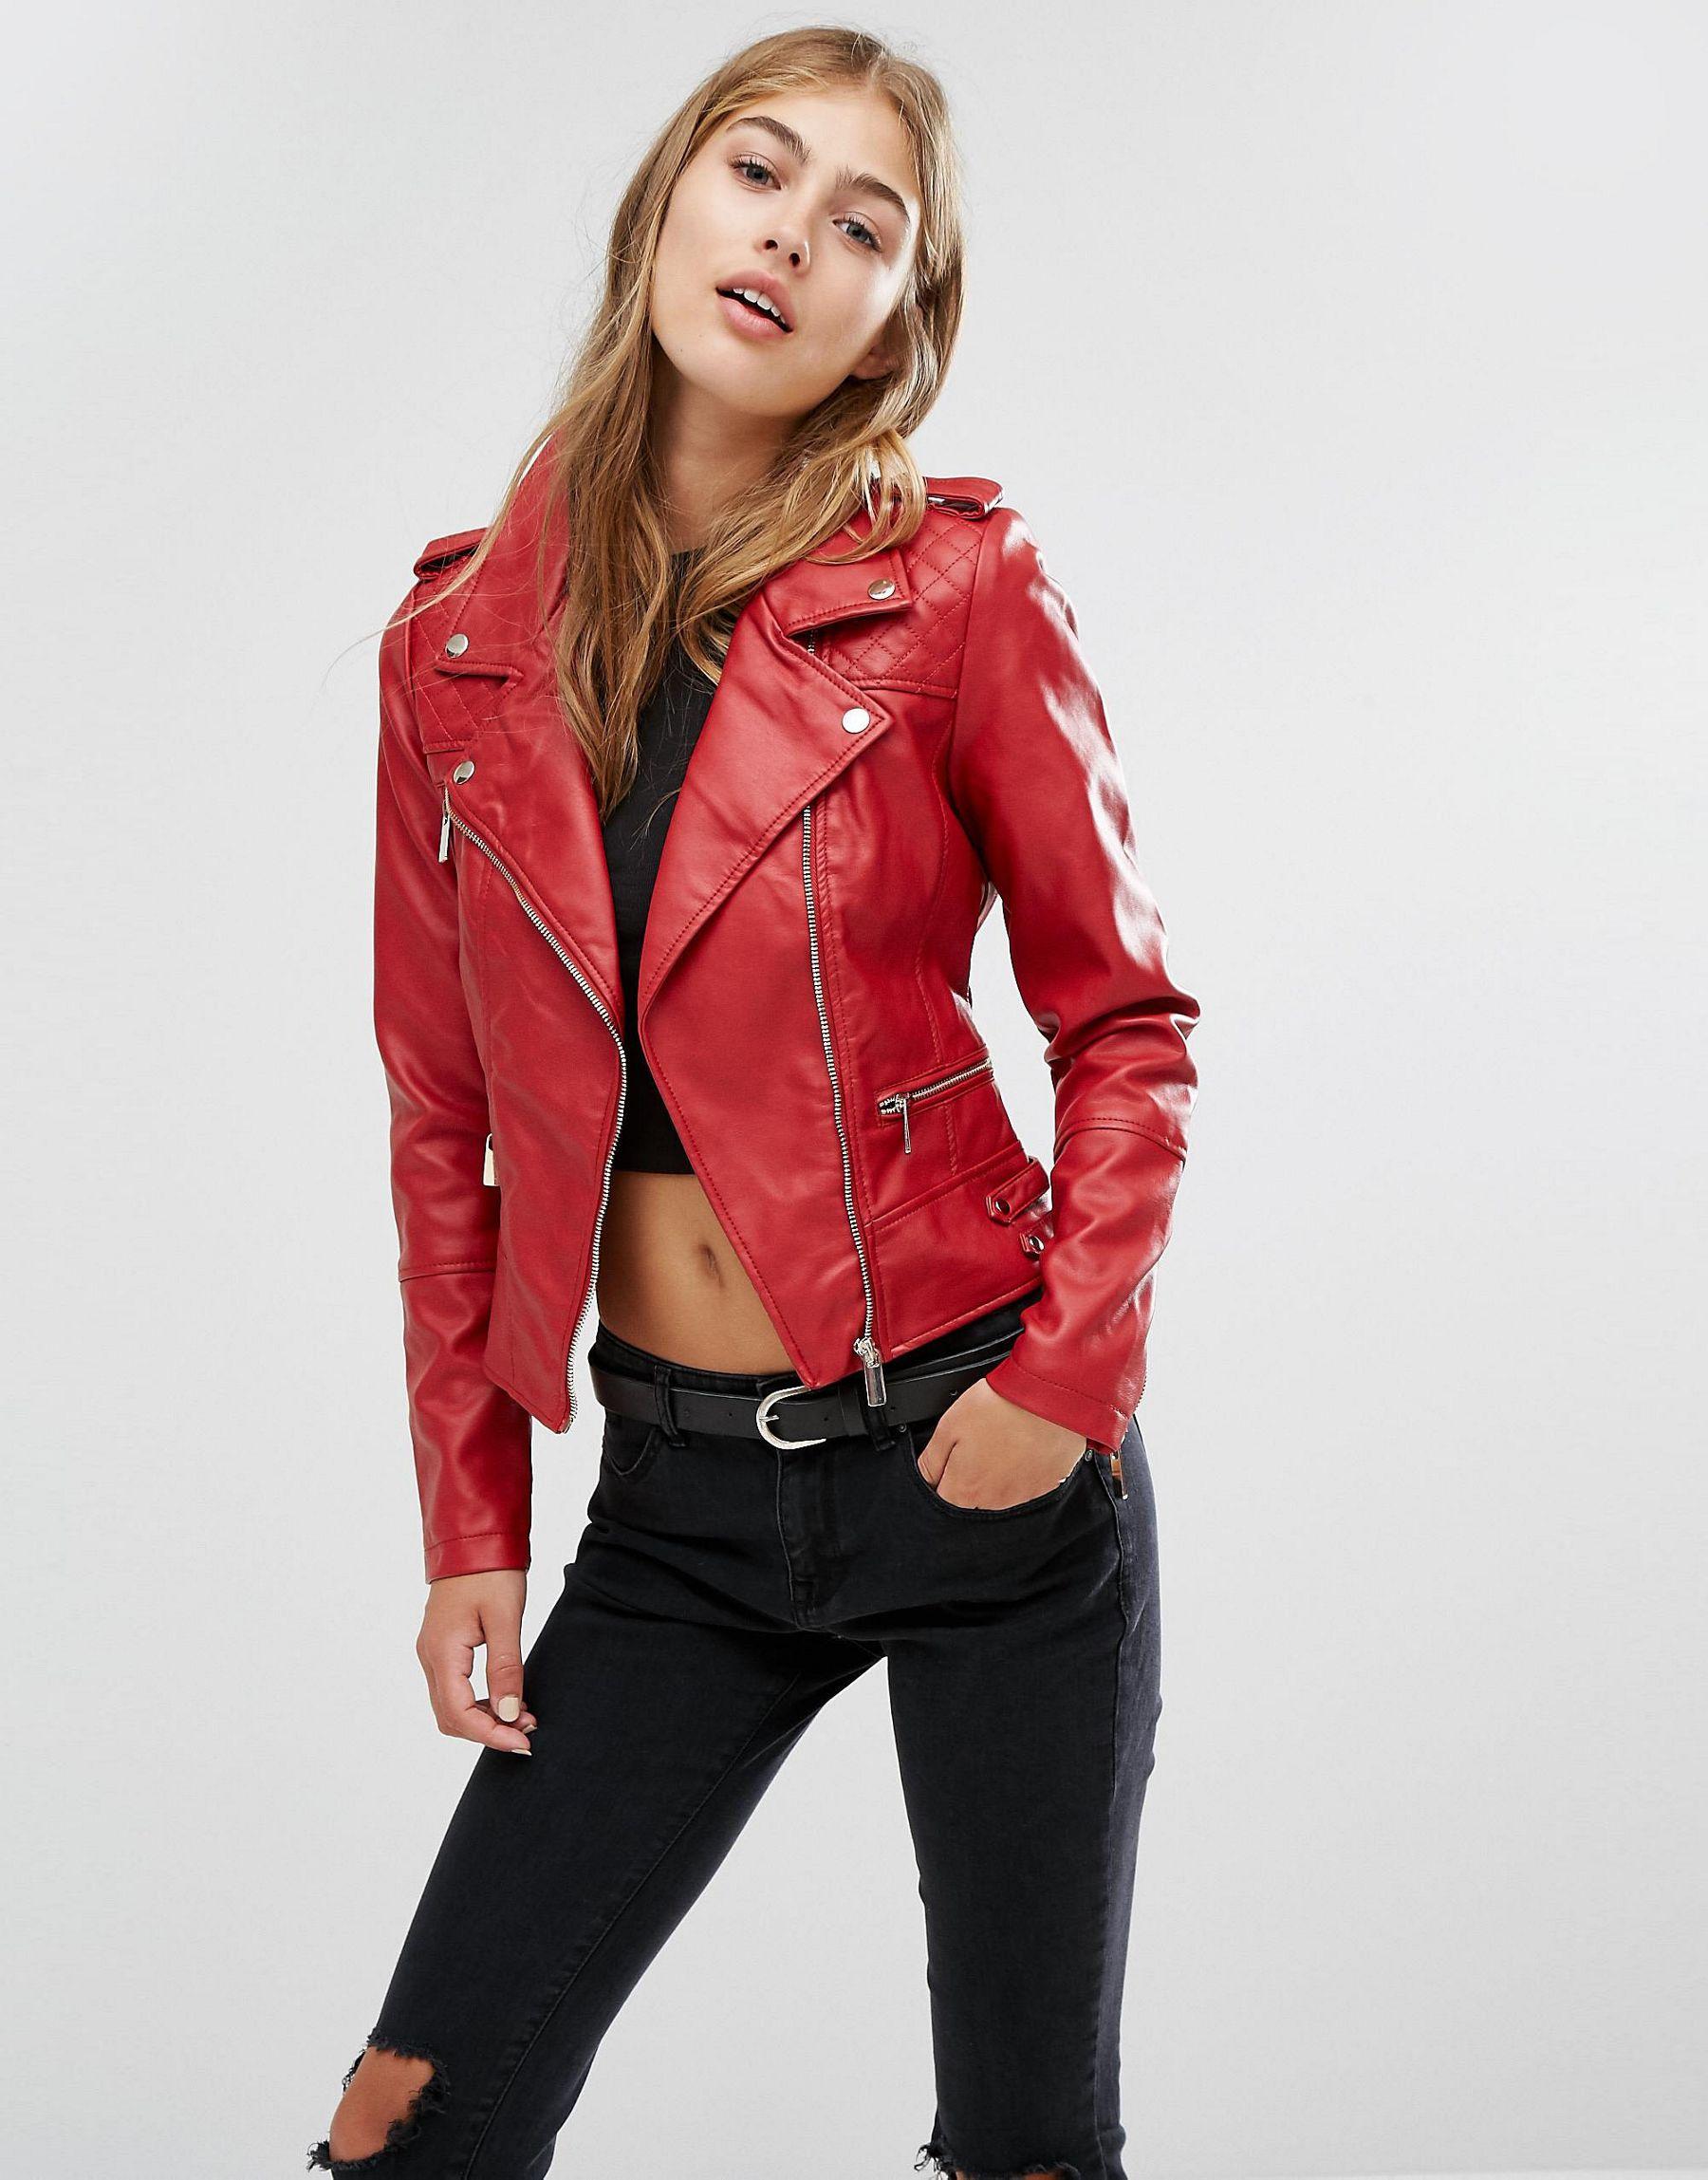 Pimkie Leather Jacket ~ Pimkie Collarless Leather Look Biker Jacket in ...